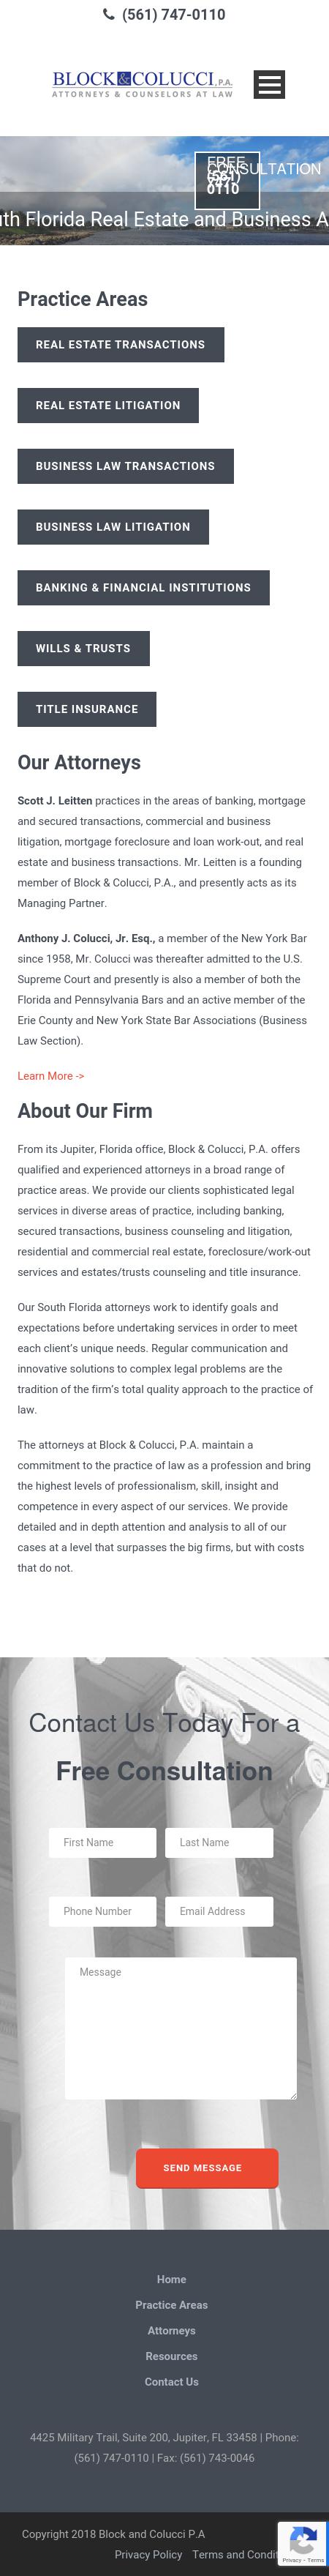 Block & Colucci PA - Jupiter FL Lawyers